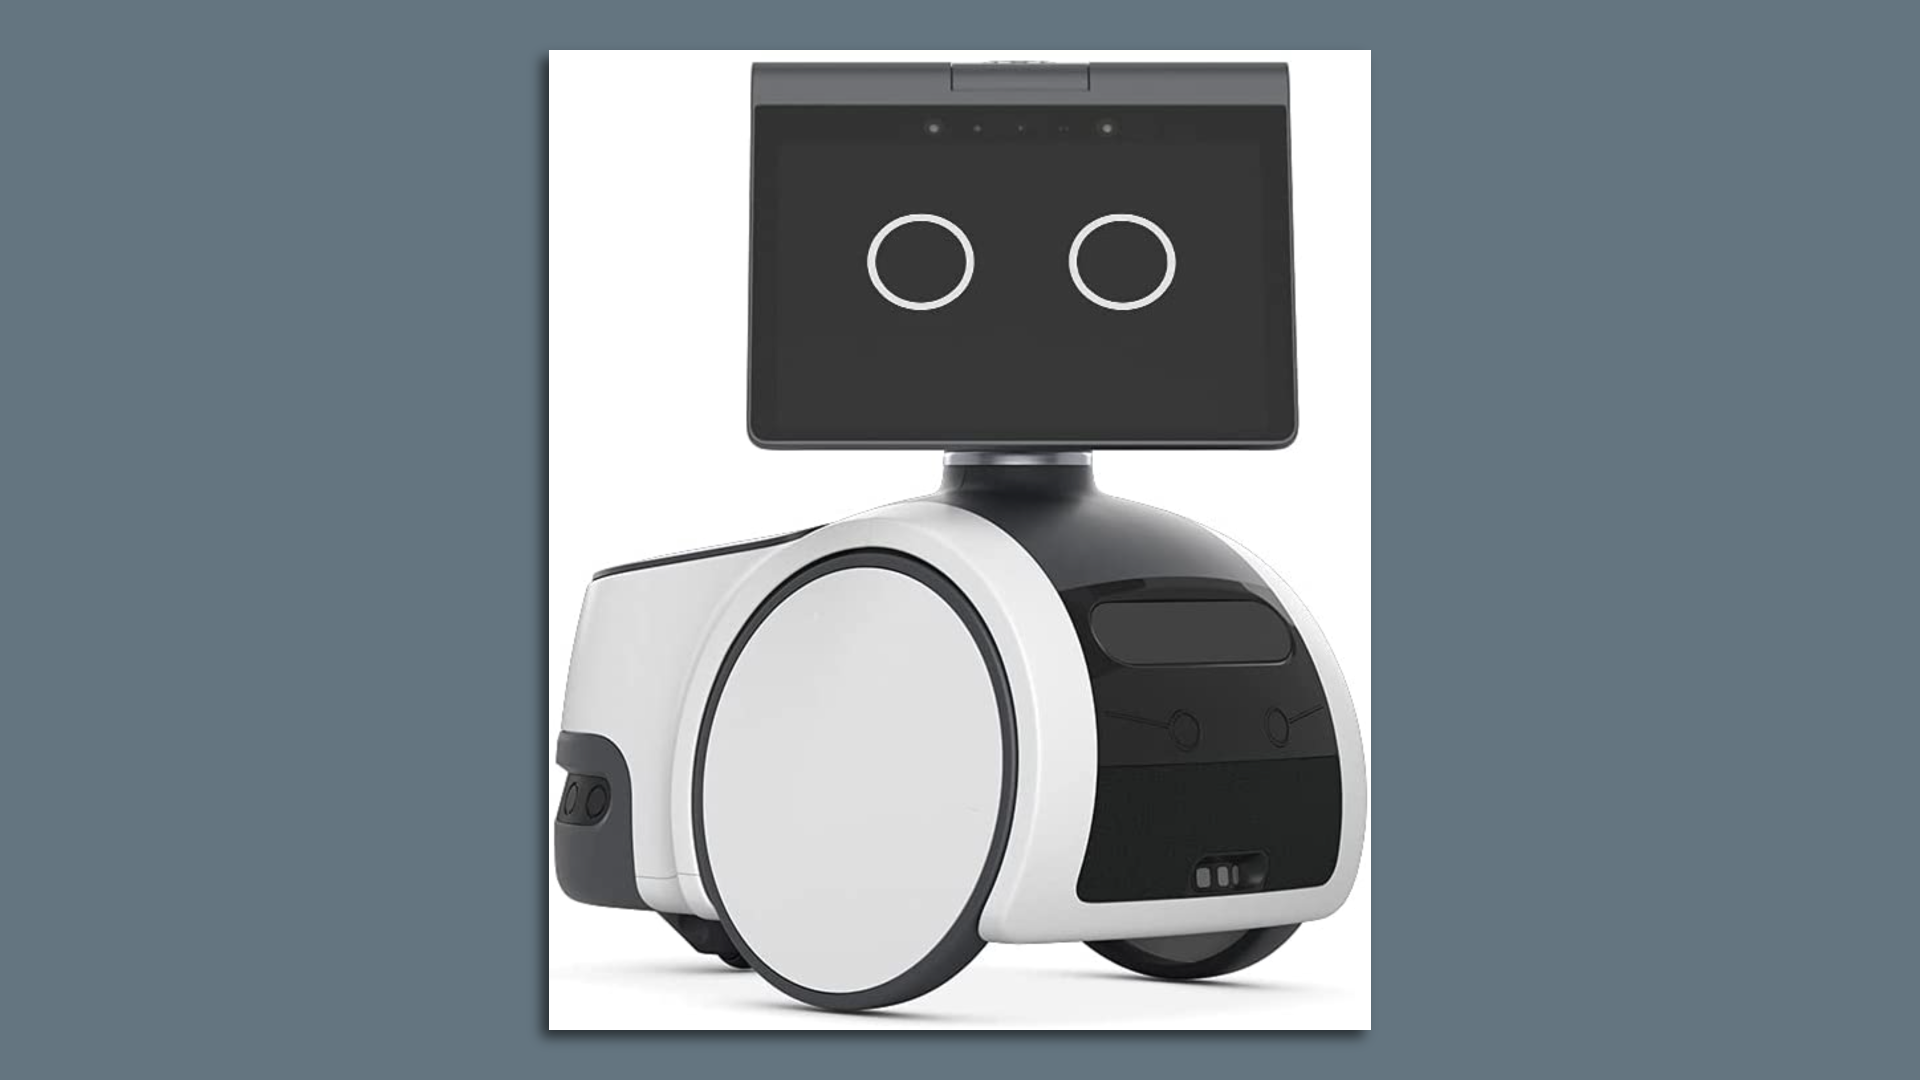 Amazon Astro home robot.